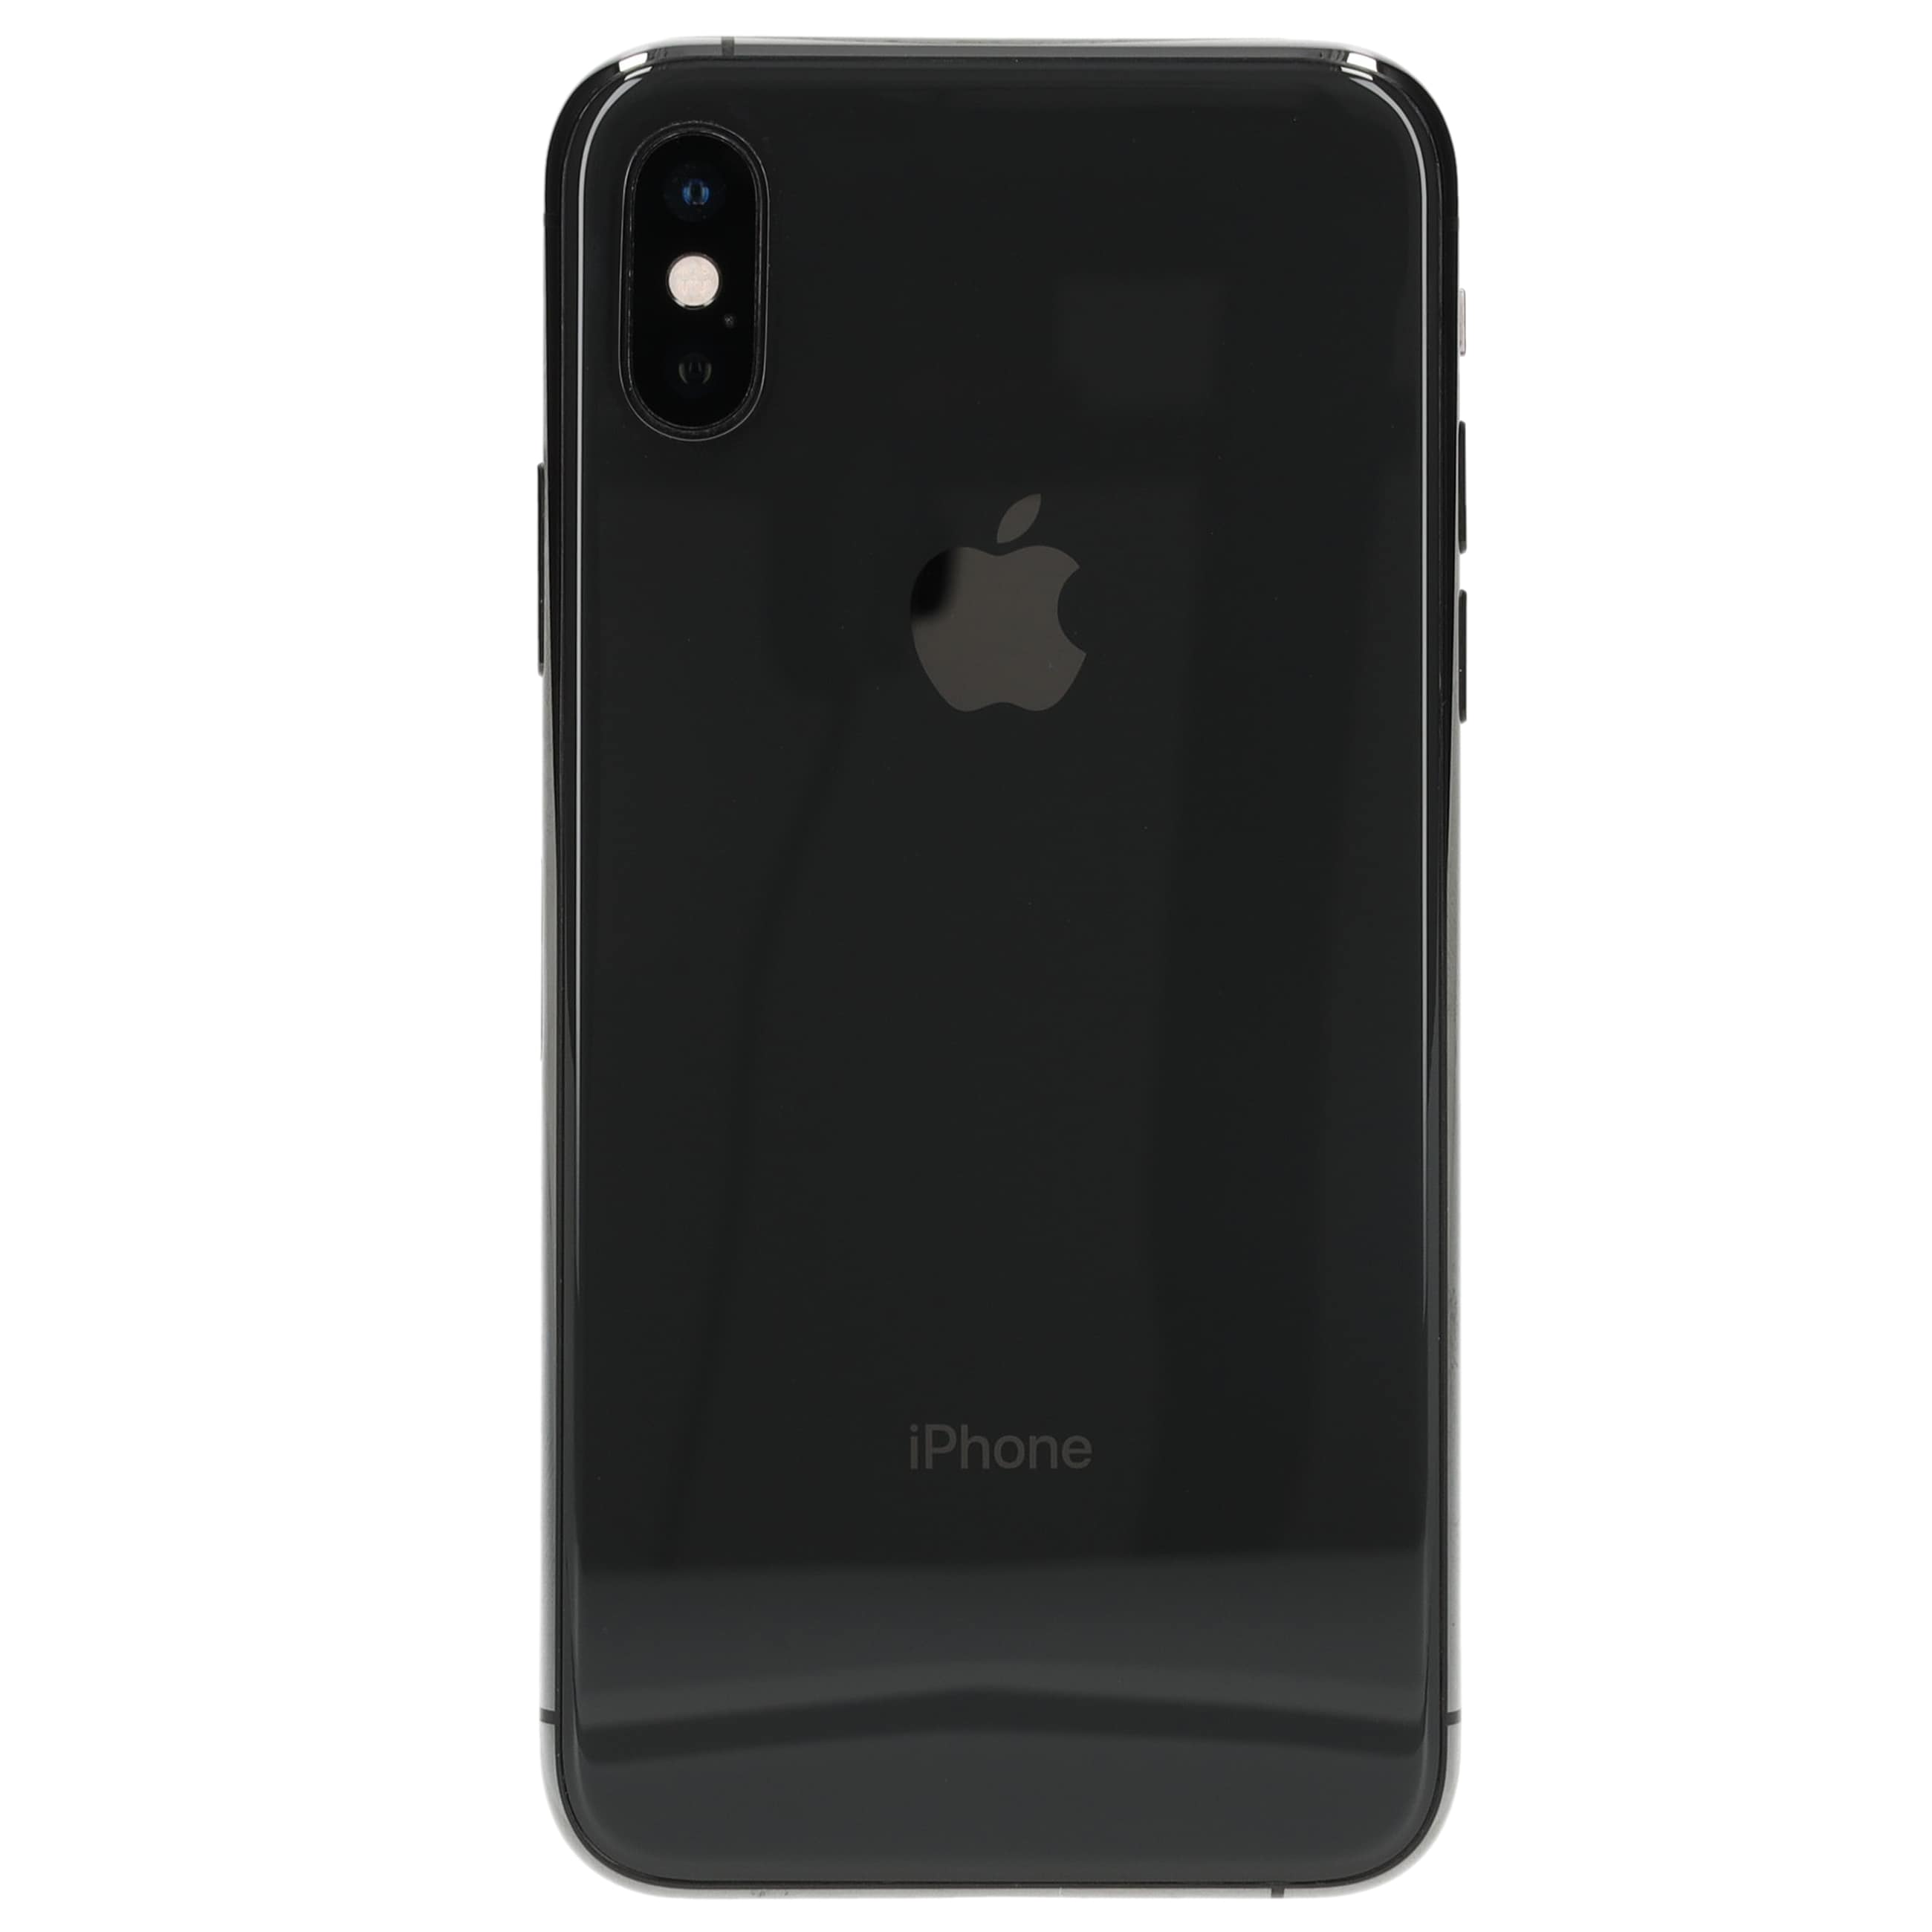 Apple iPhone XS - 64 GB - Space Gray